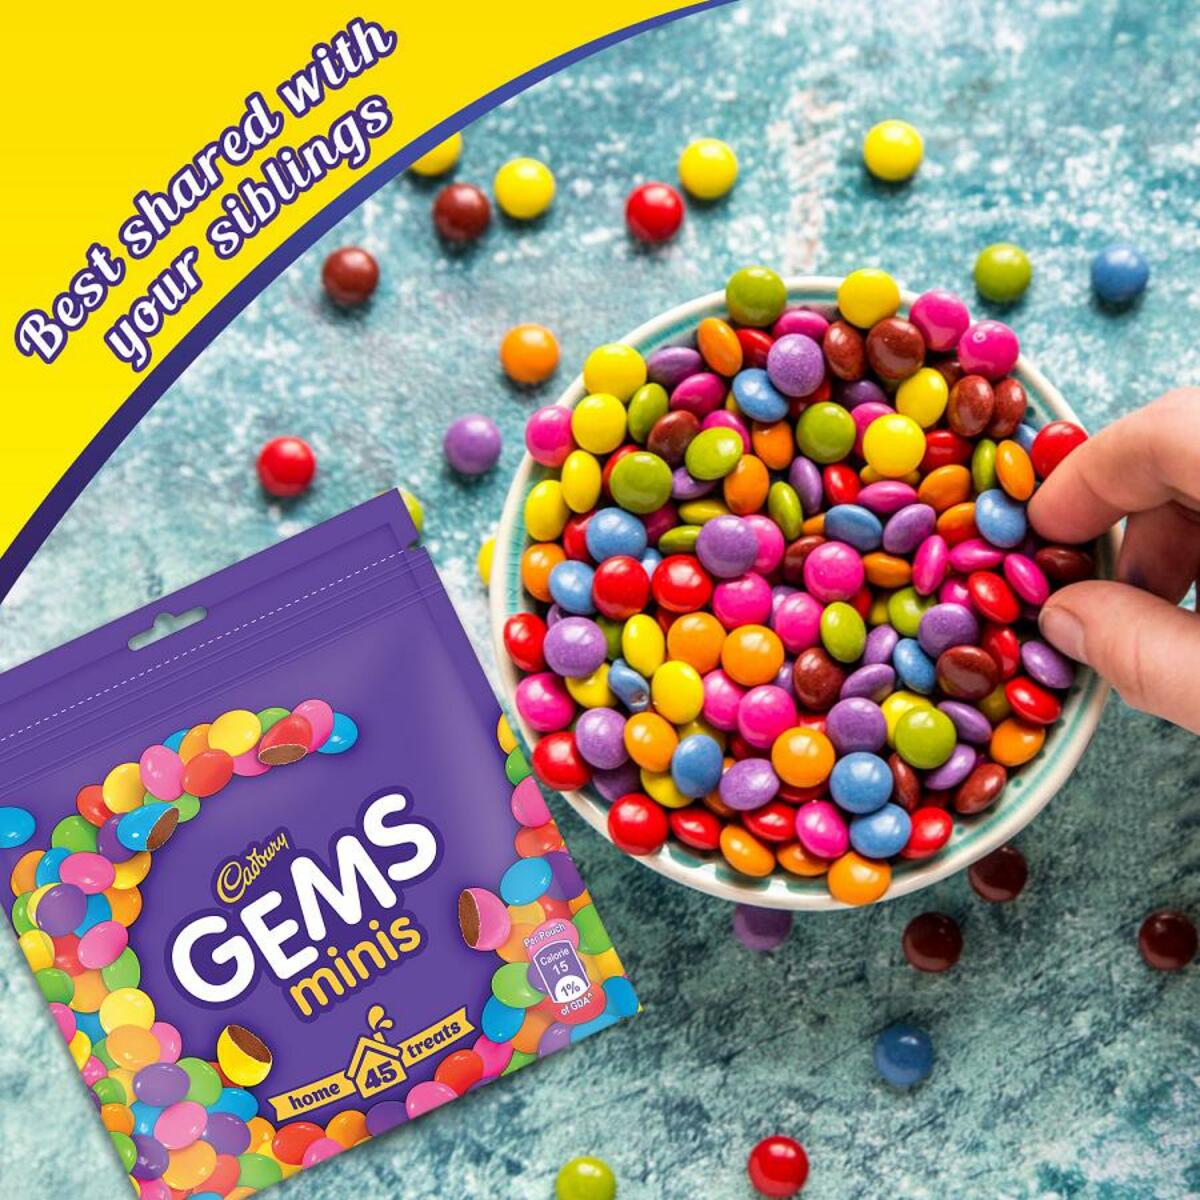 Cadbury Gems HT Pack 126.4g